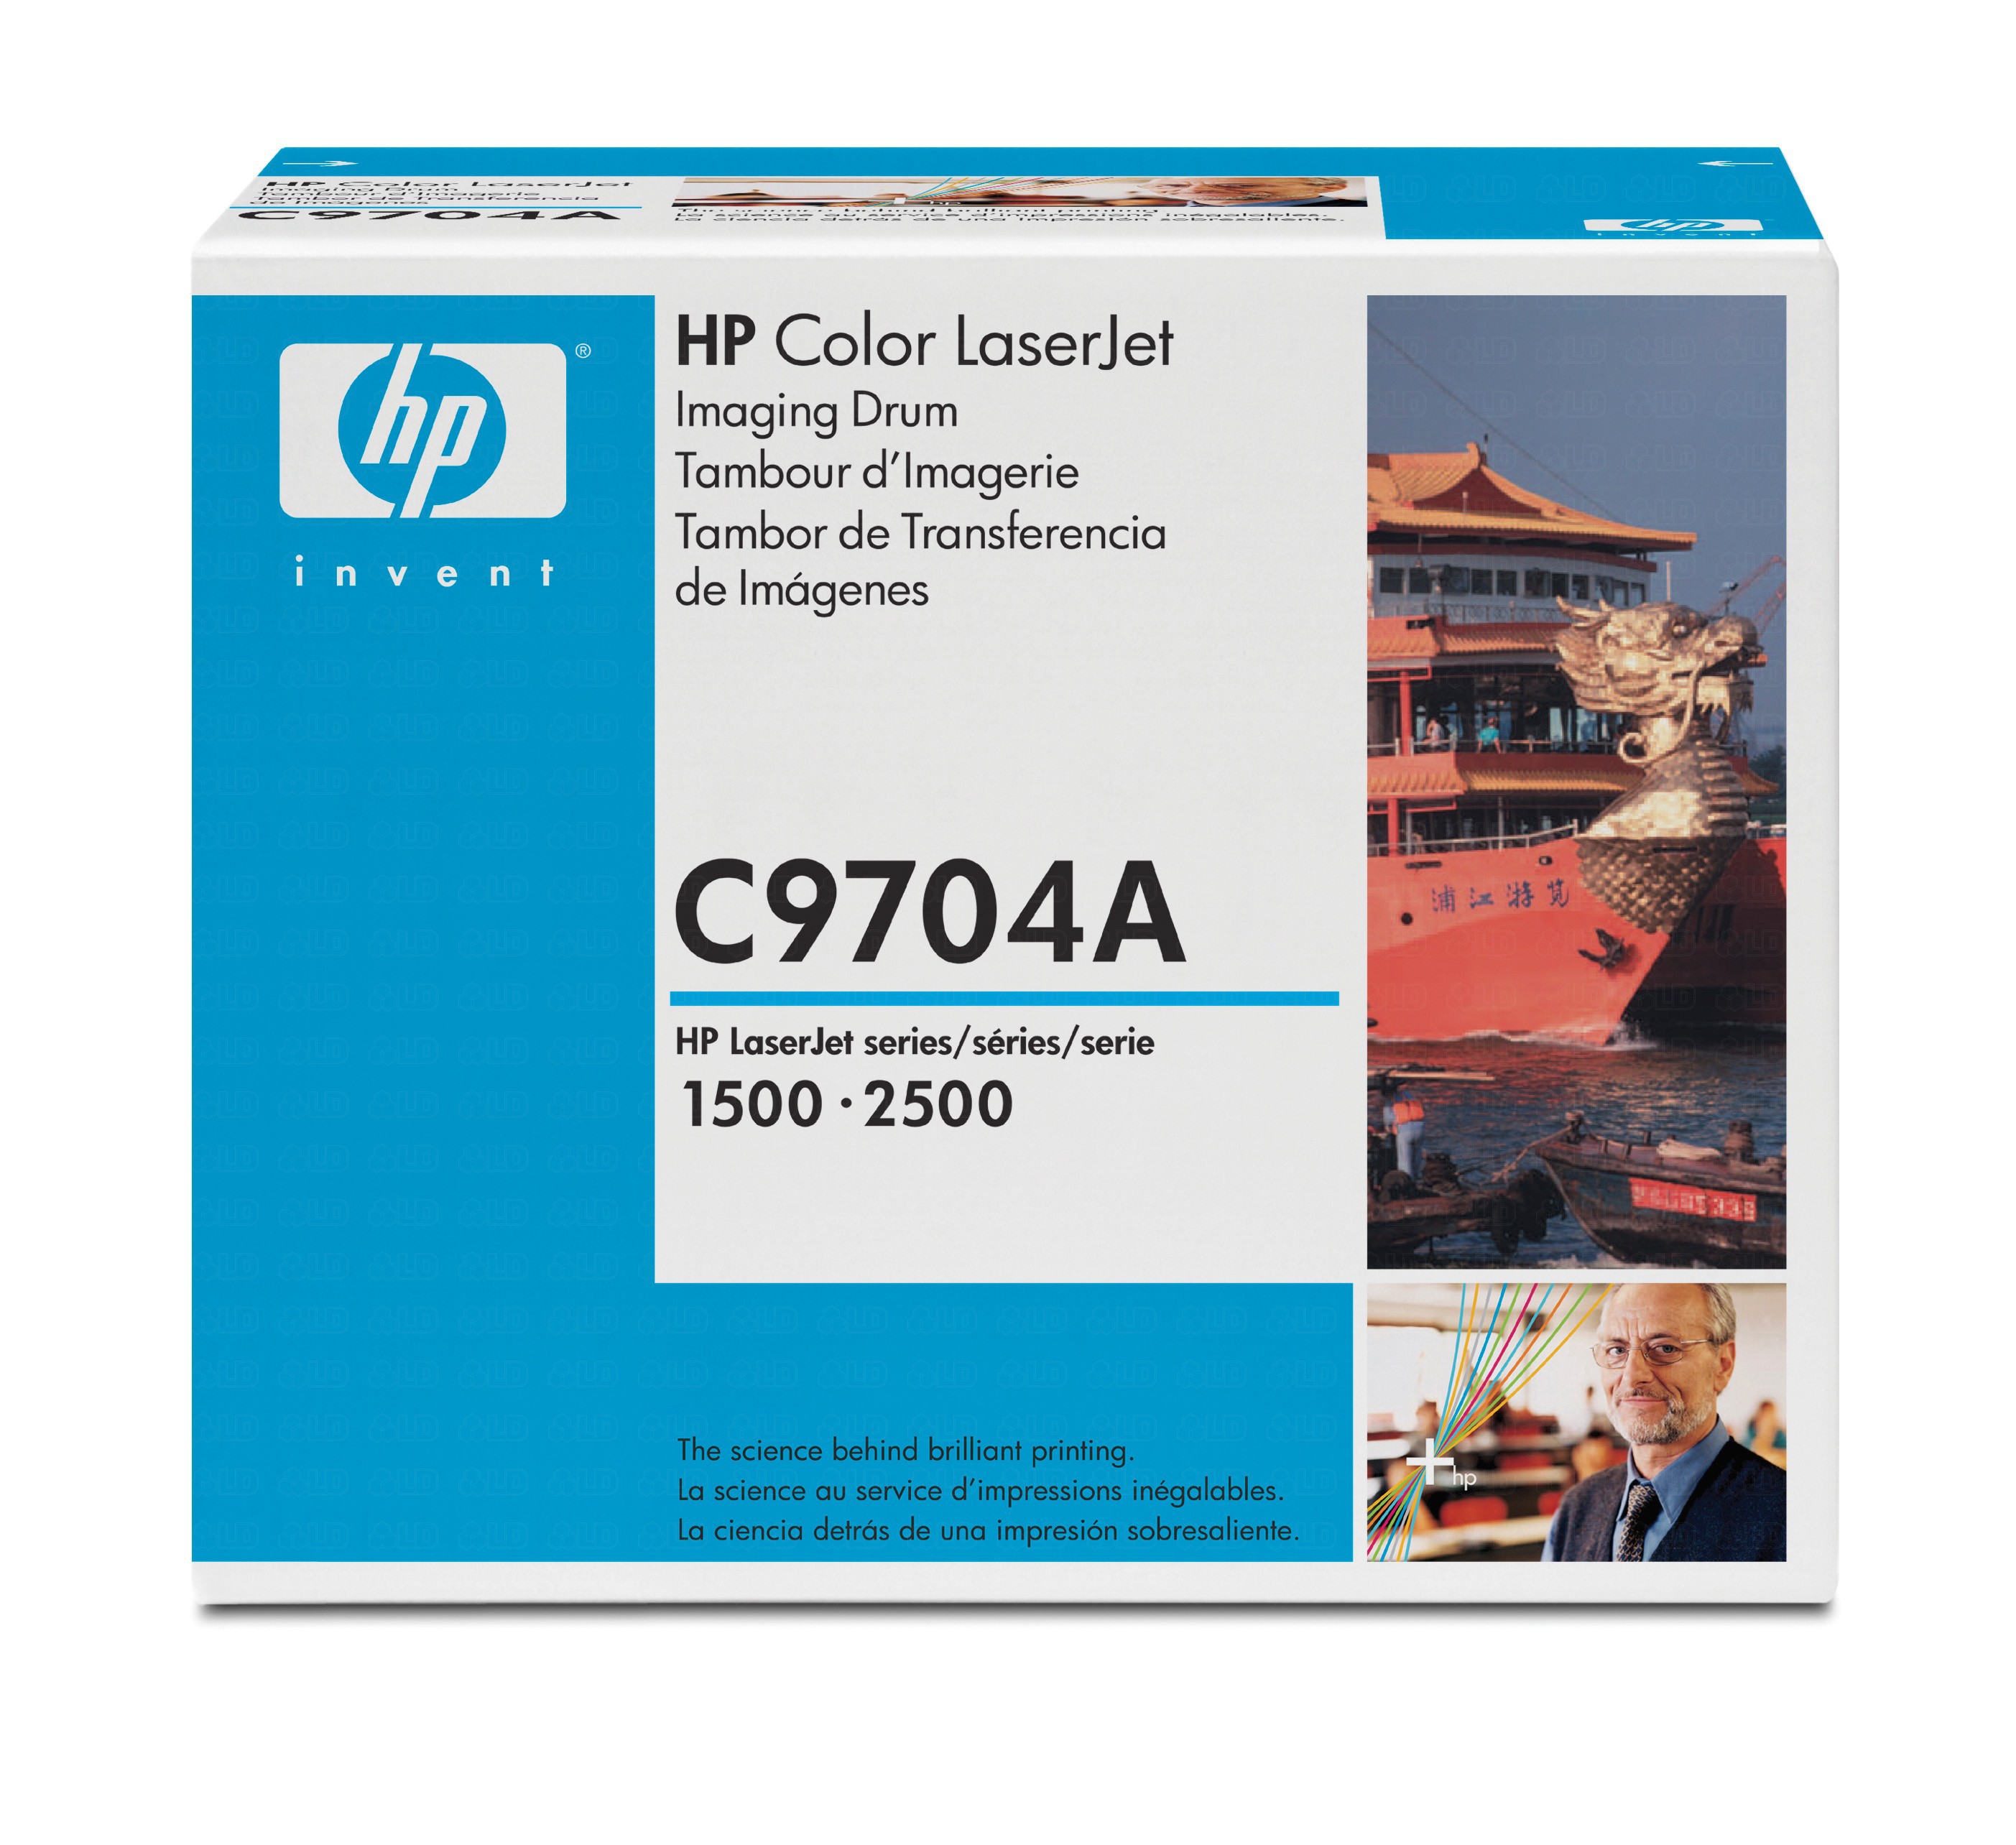 HP Color LaserJet 1500 /2500 C9704A Imaging Drum